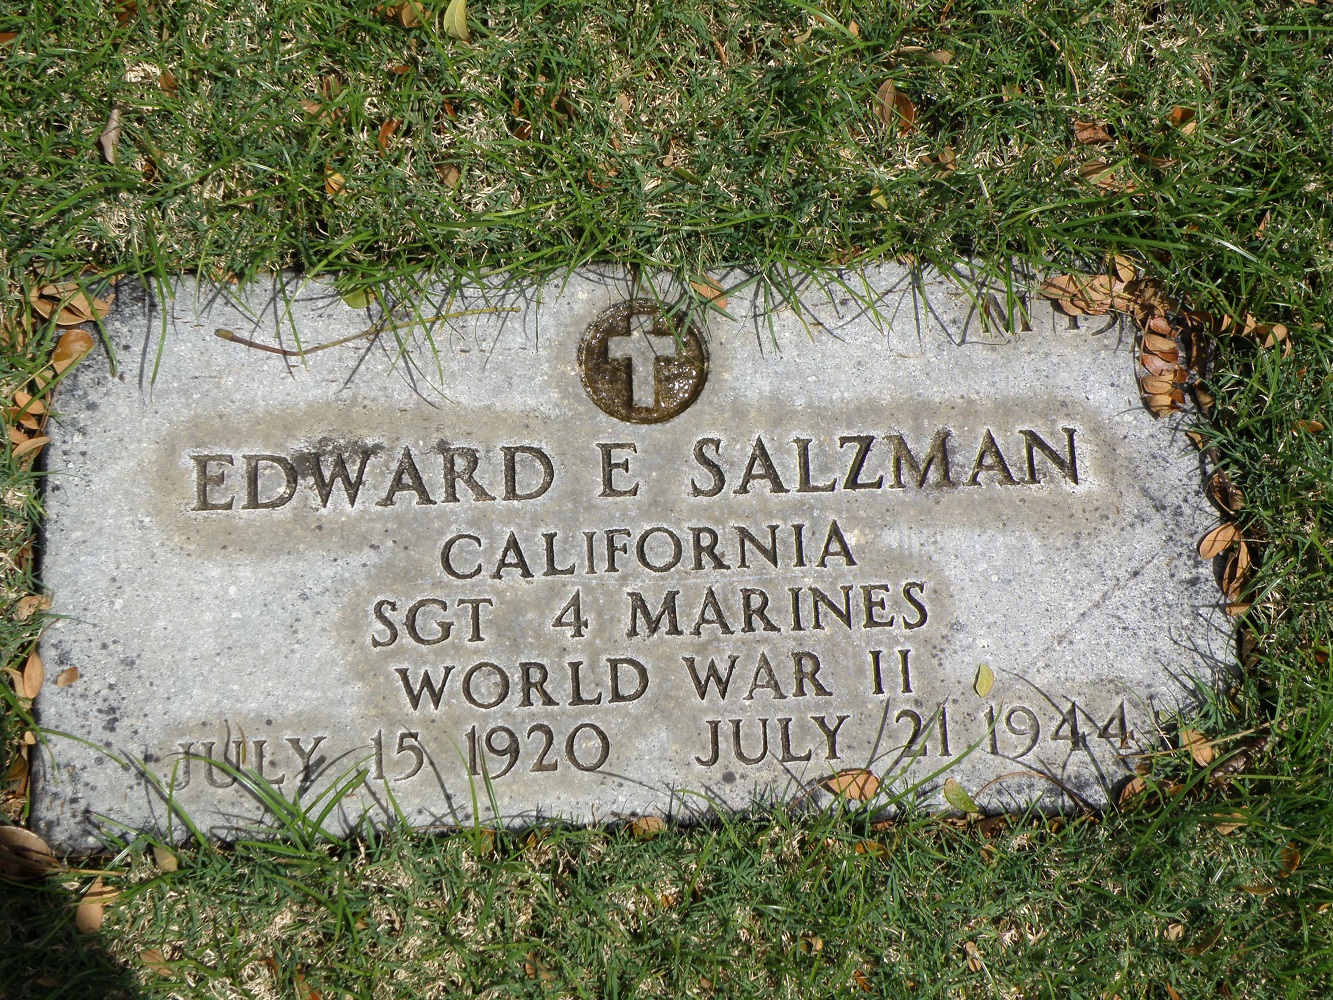 E. Salzman (Grave)